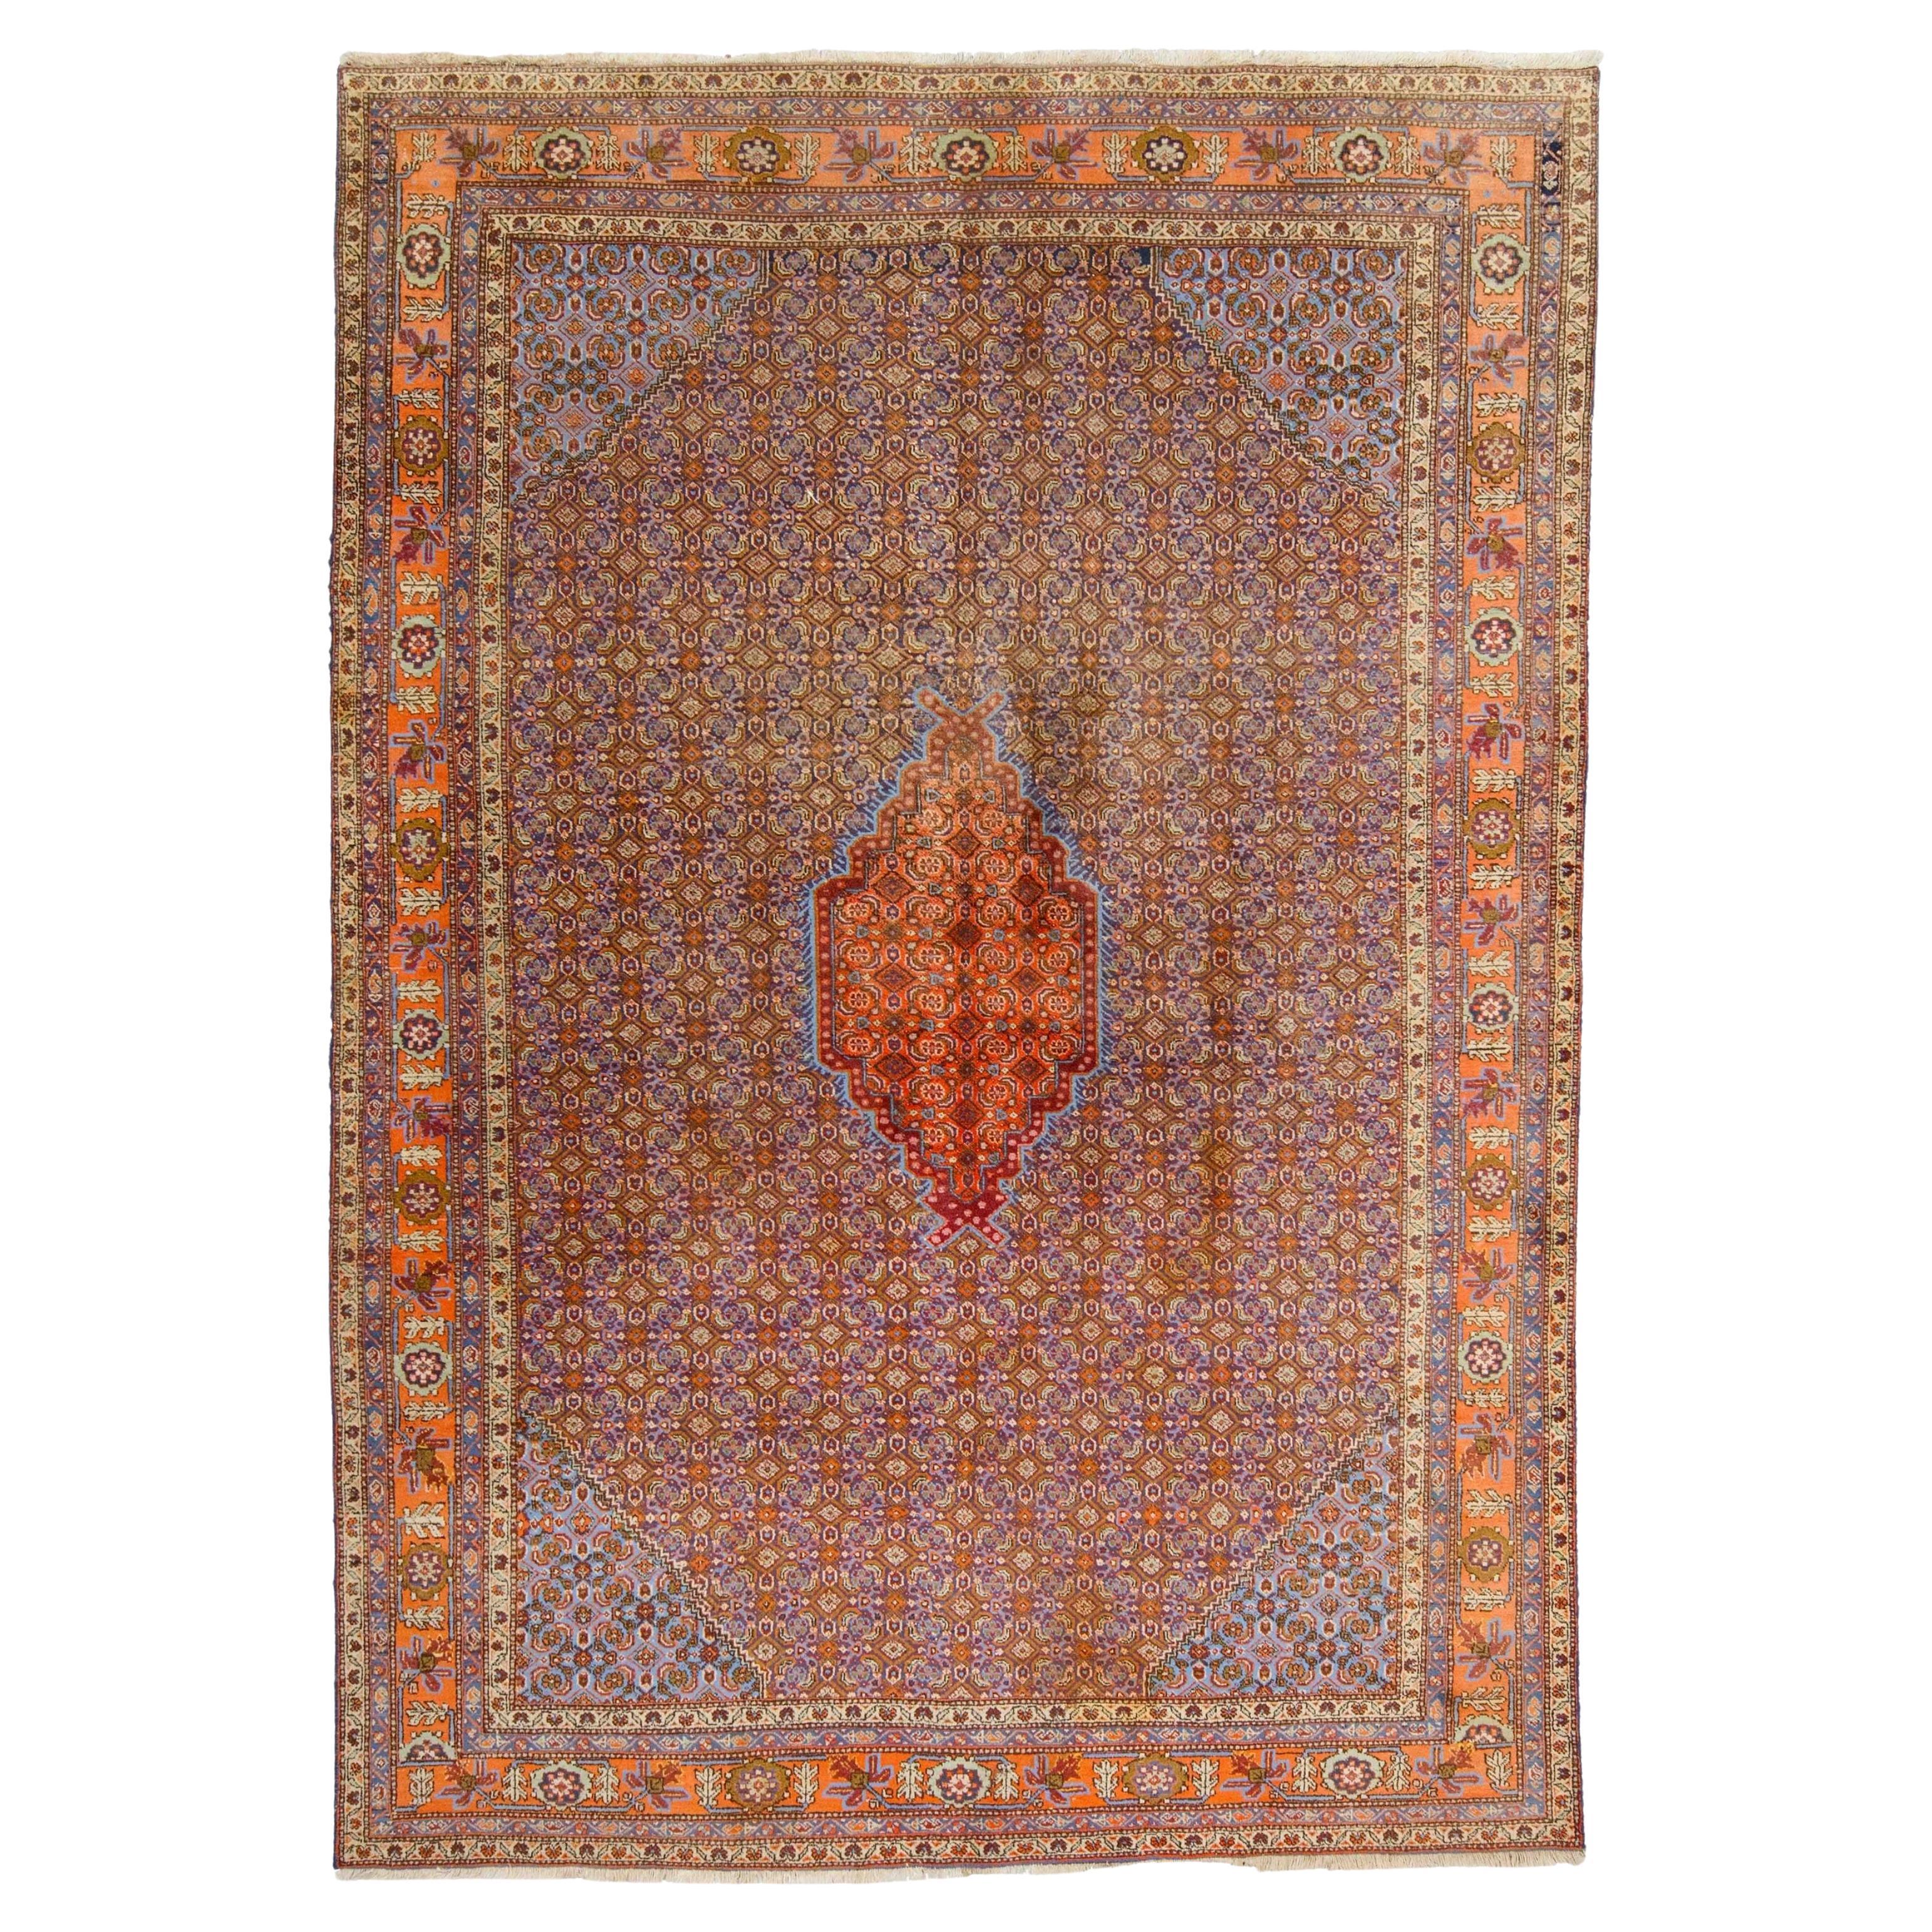 Antique Tabriz Rug - Late of 19th Century Azerbaijan Tabriz Rug, Antique Carpet